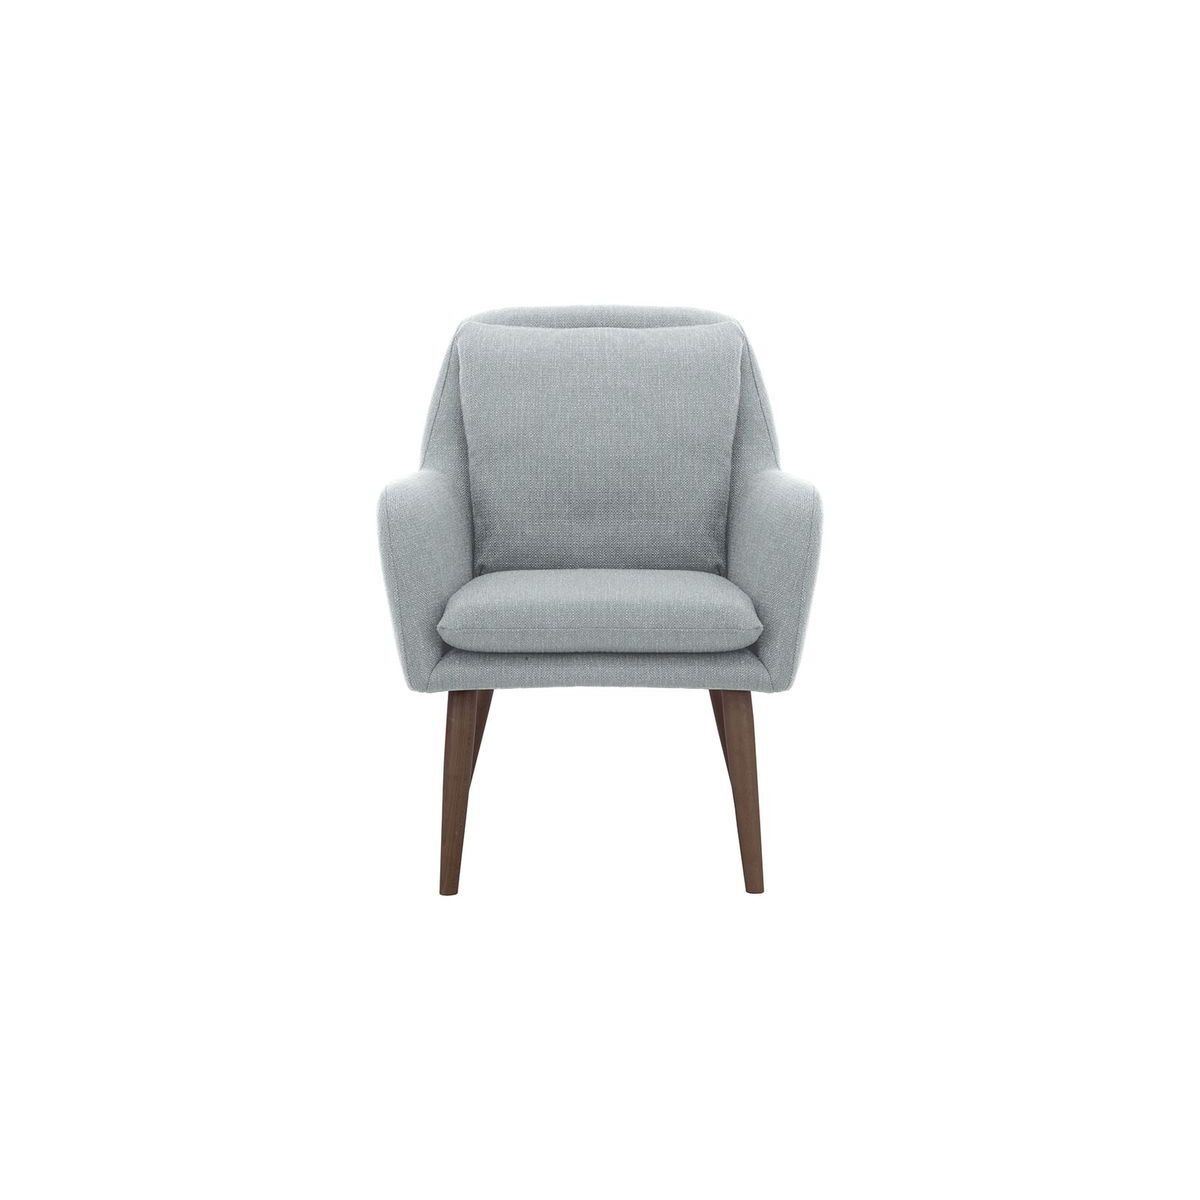 Luie Chair, V 33 - Rust, Leg colour: aveo - image 1